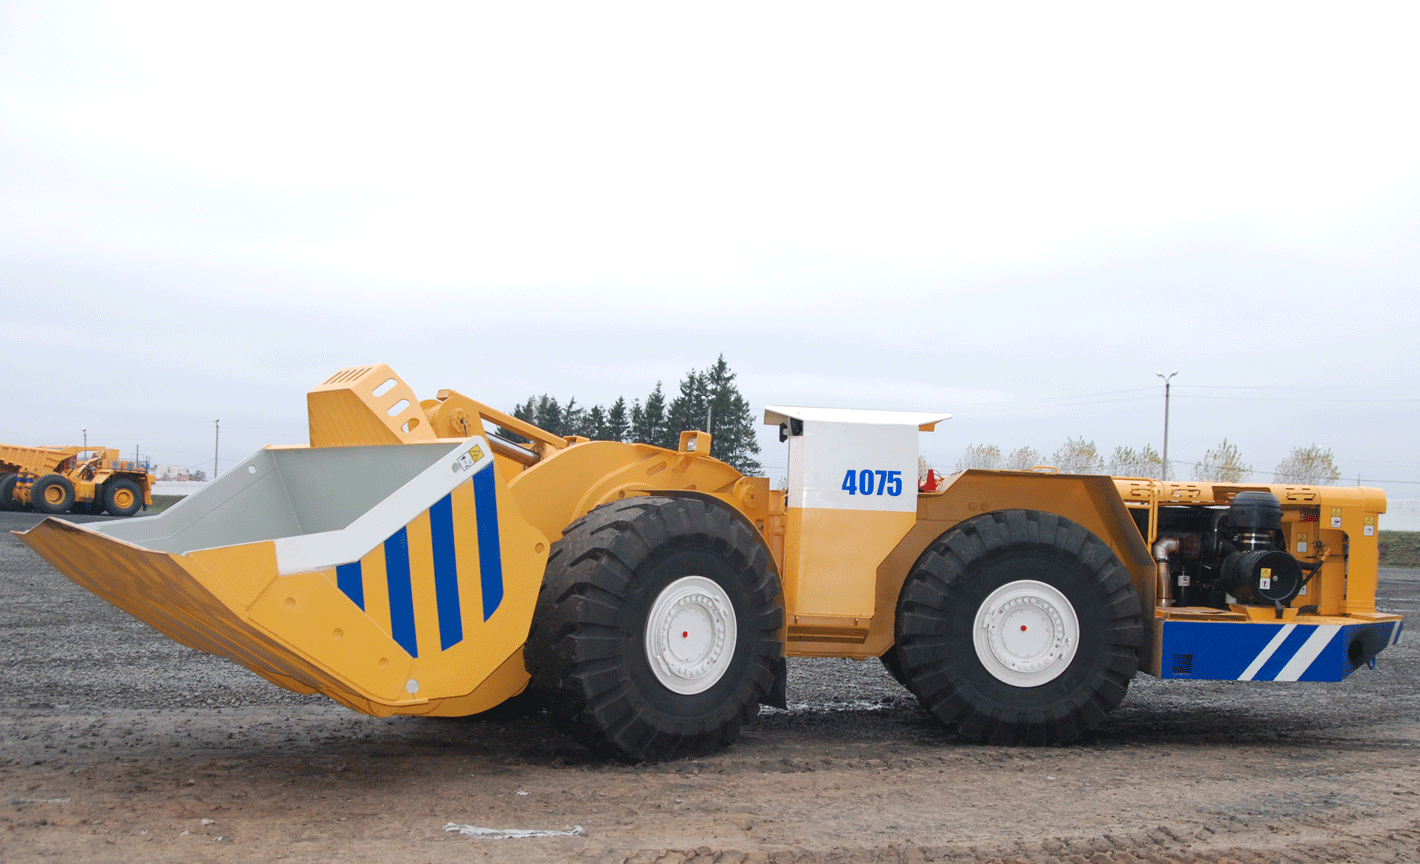 MOAZ-4075 load-haul-dump units